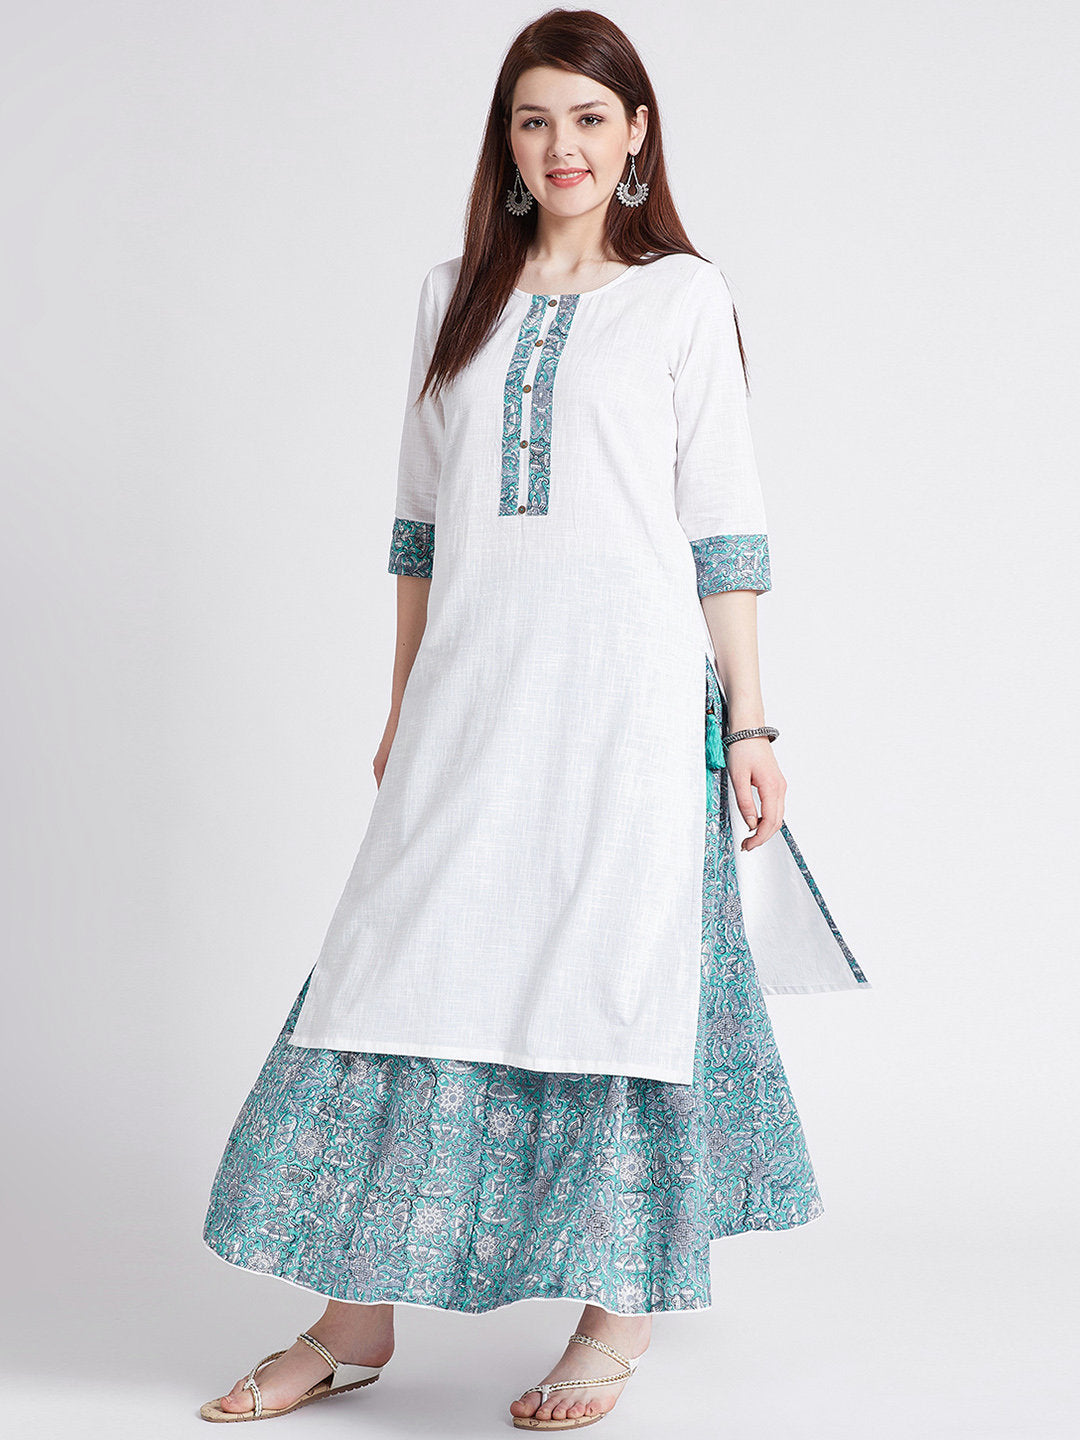 Block Printed Designer Long Kurta & Skirt with Dupatta | SKU-26-11-15 |  Lable Rahul Singh